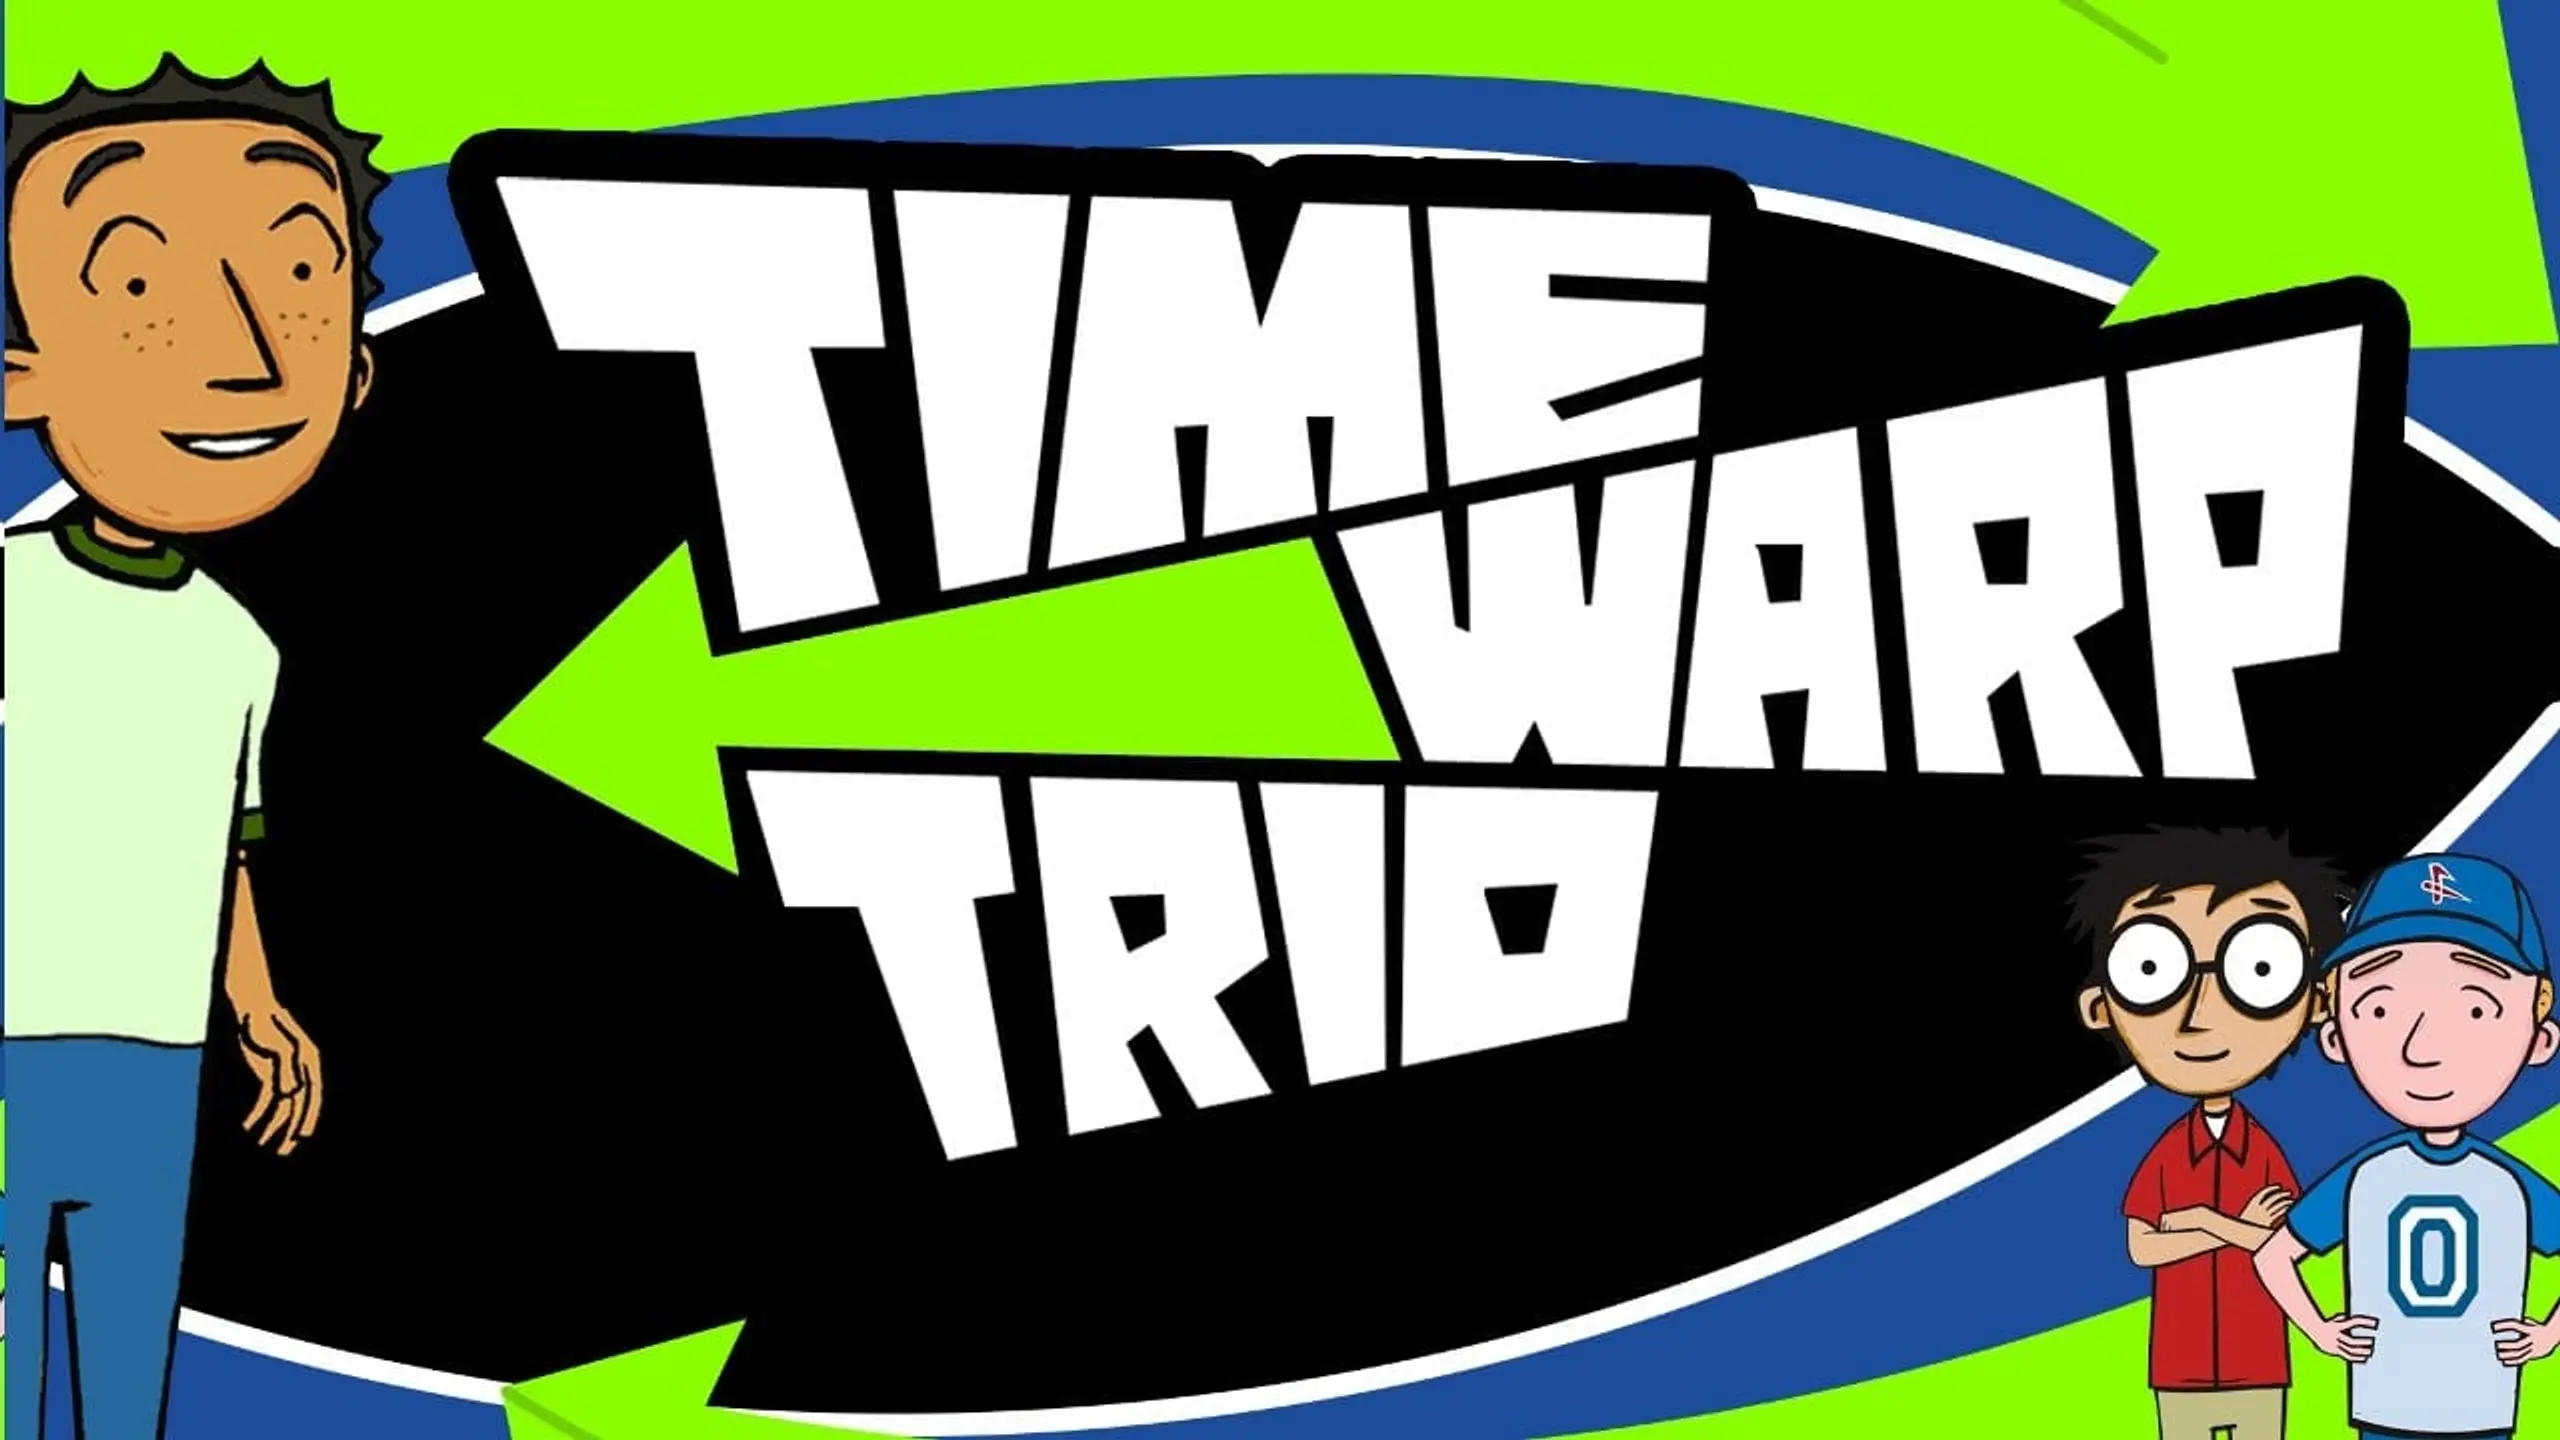 Time Warp Trio